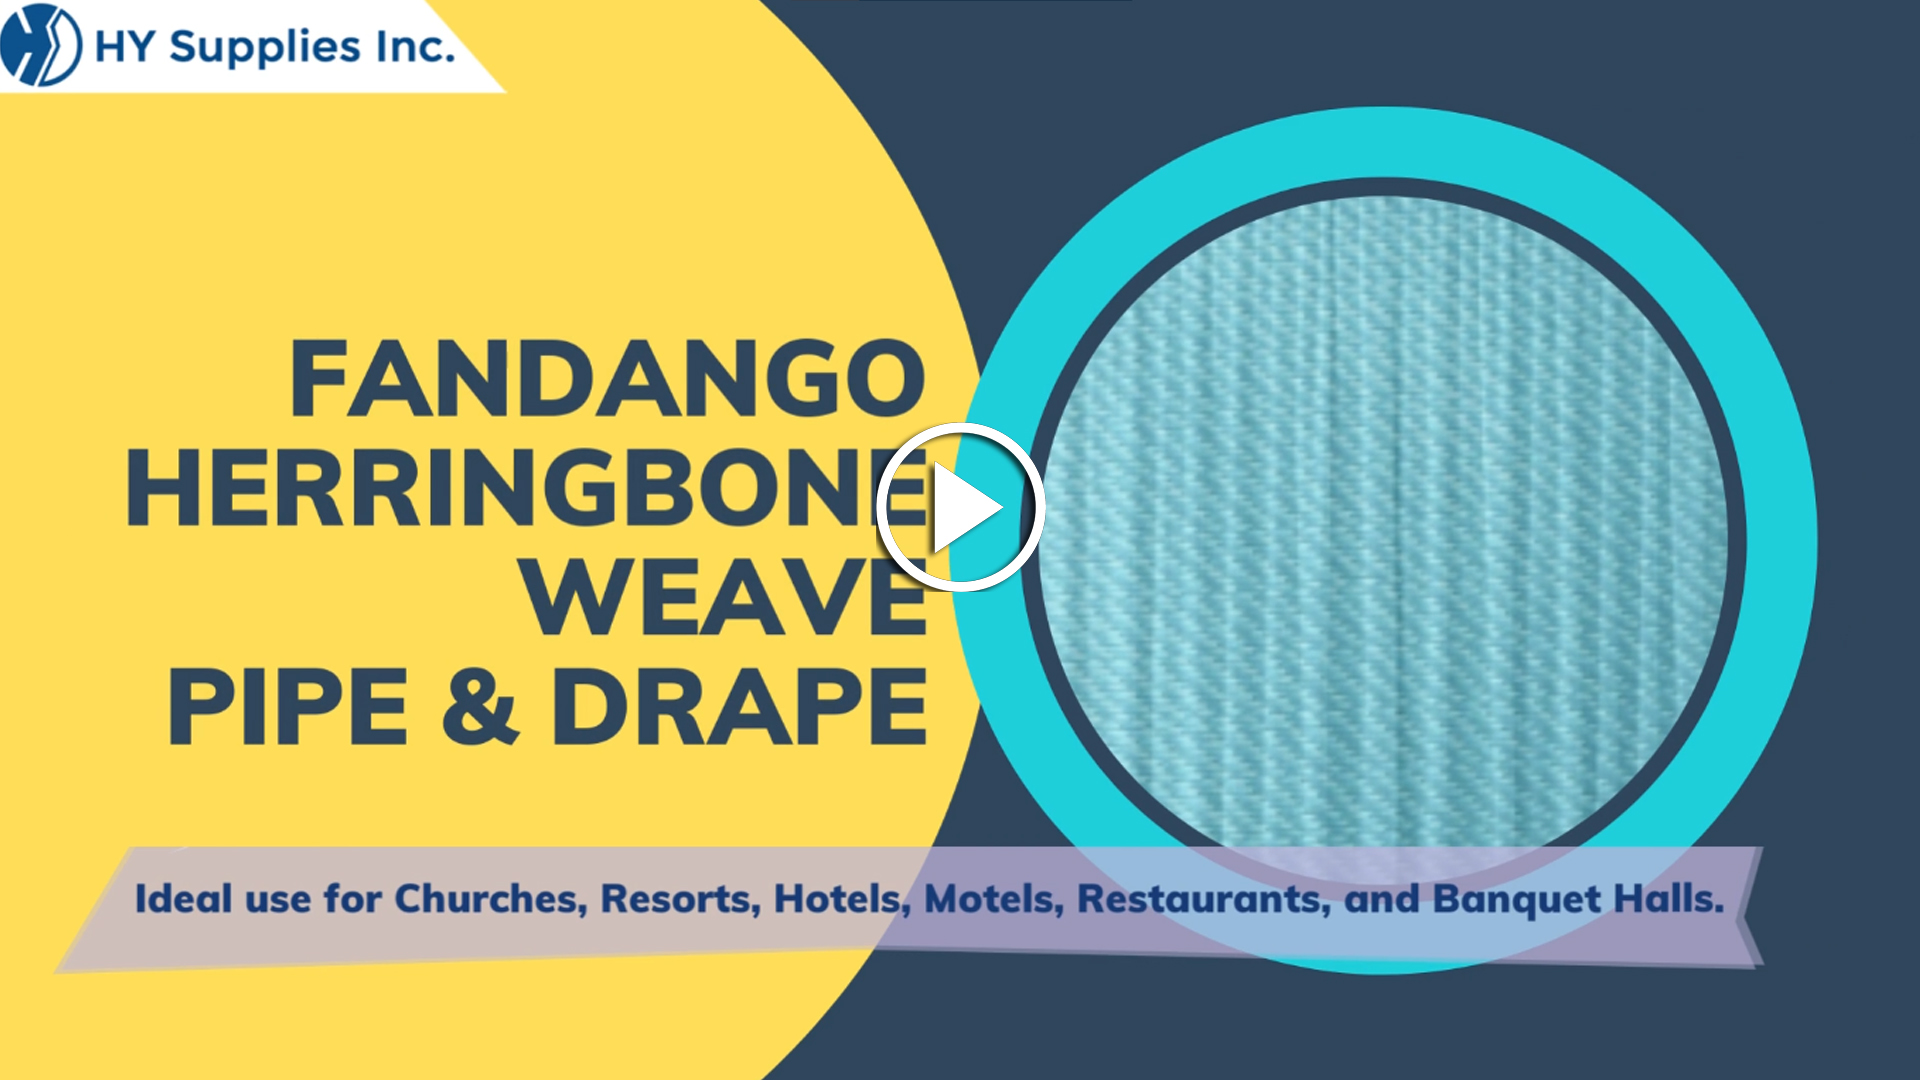 Fandango Herringbone Weave Pipe & Drape